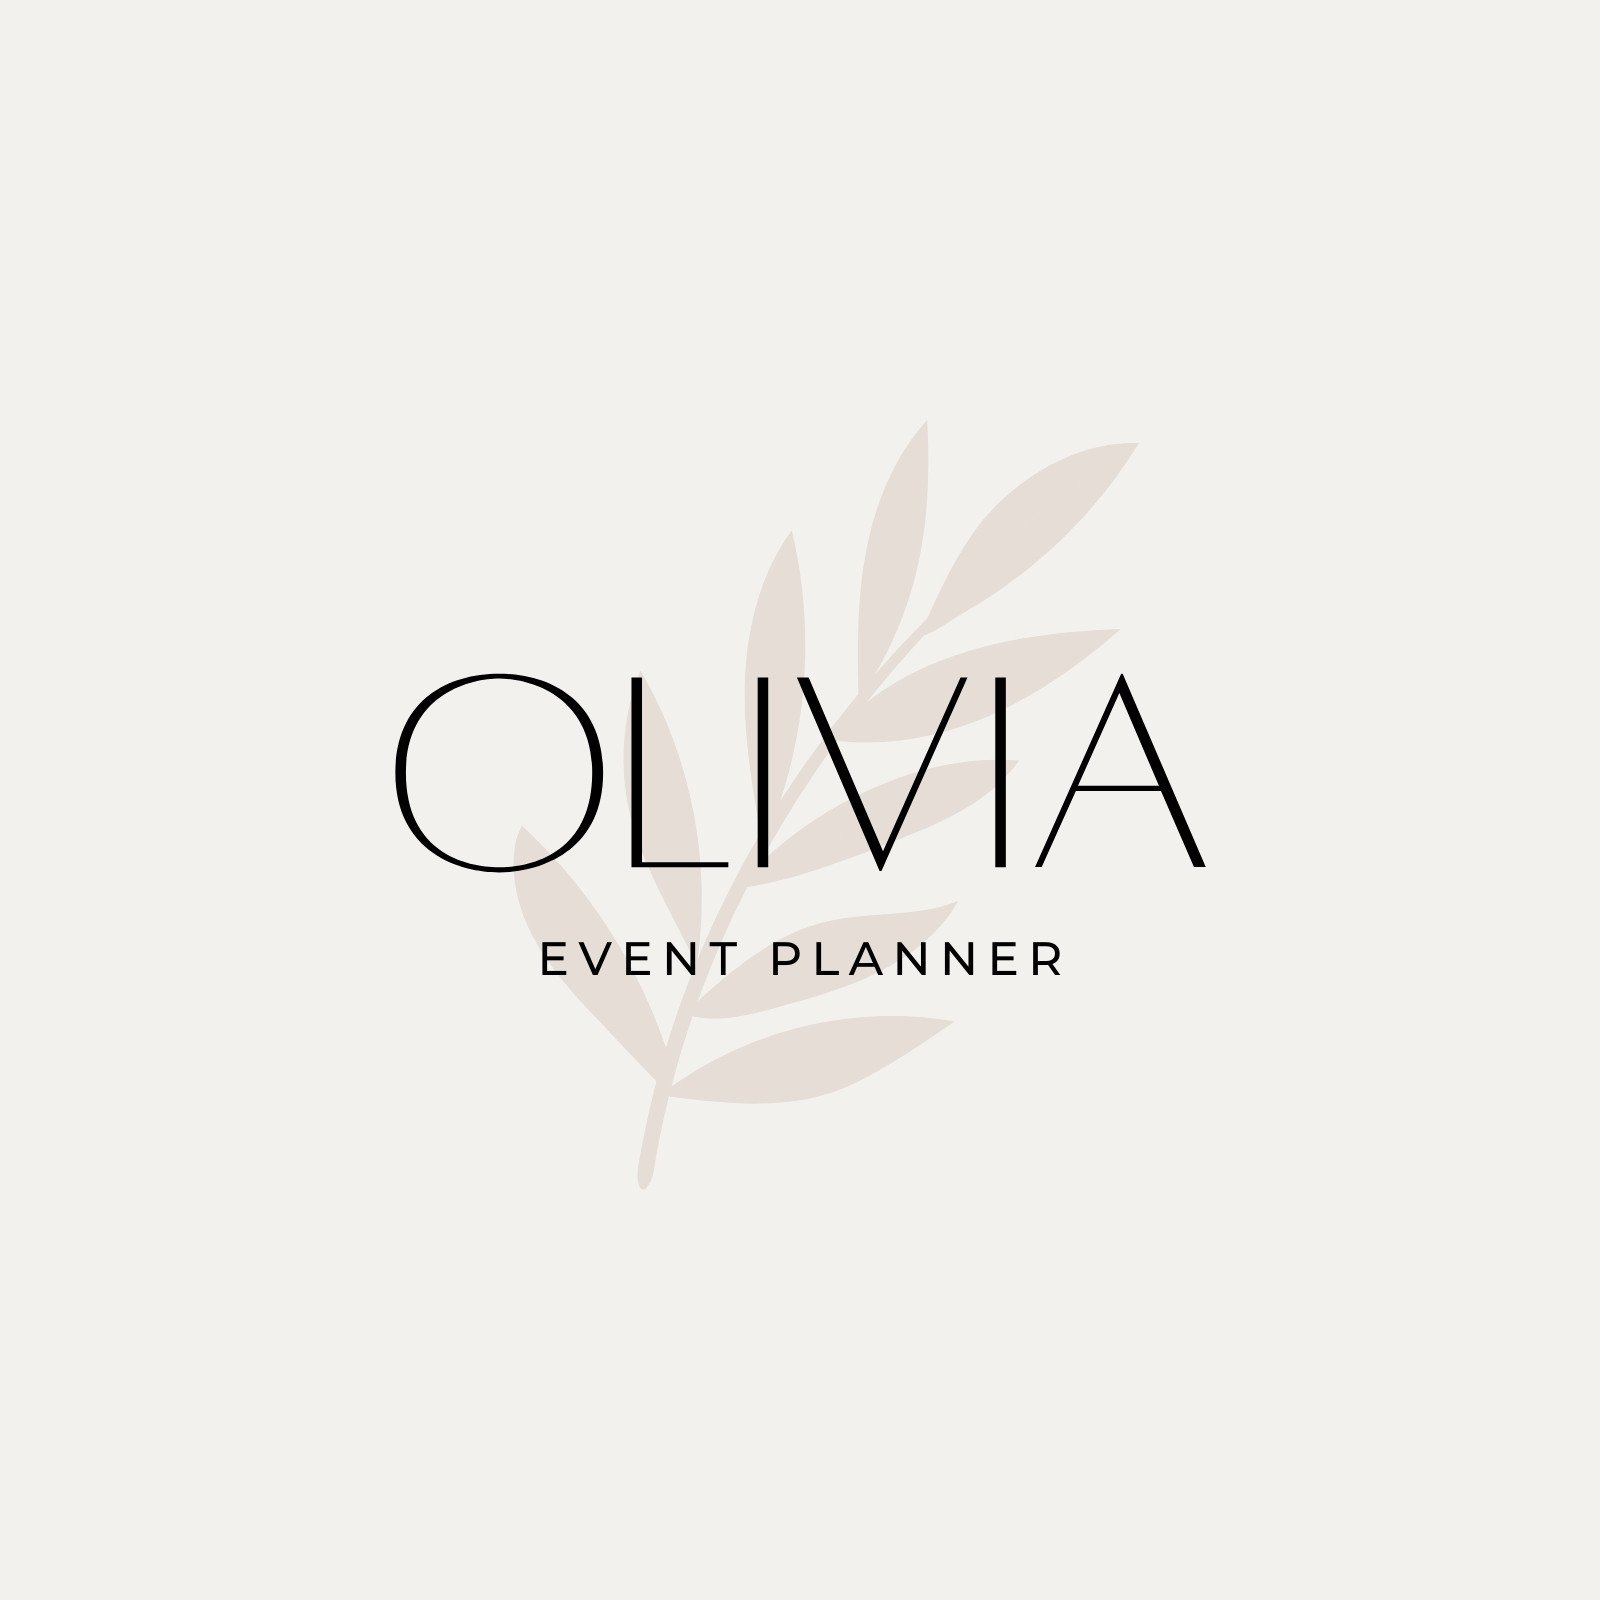 event planner logo ideas